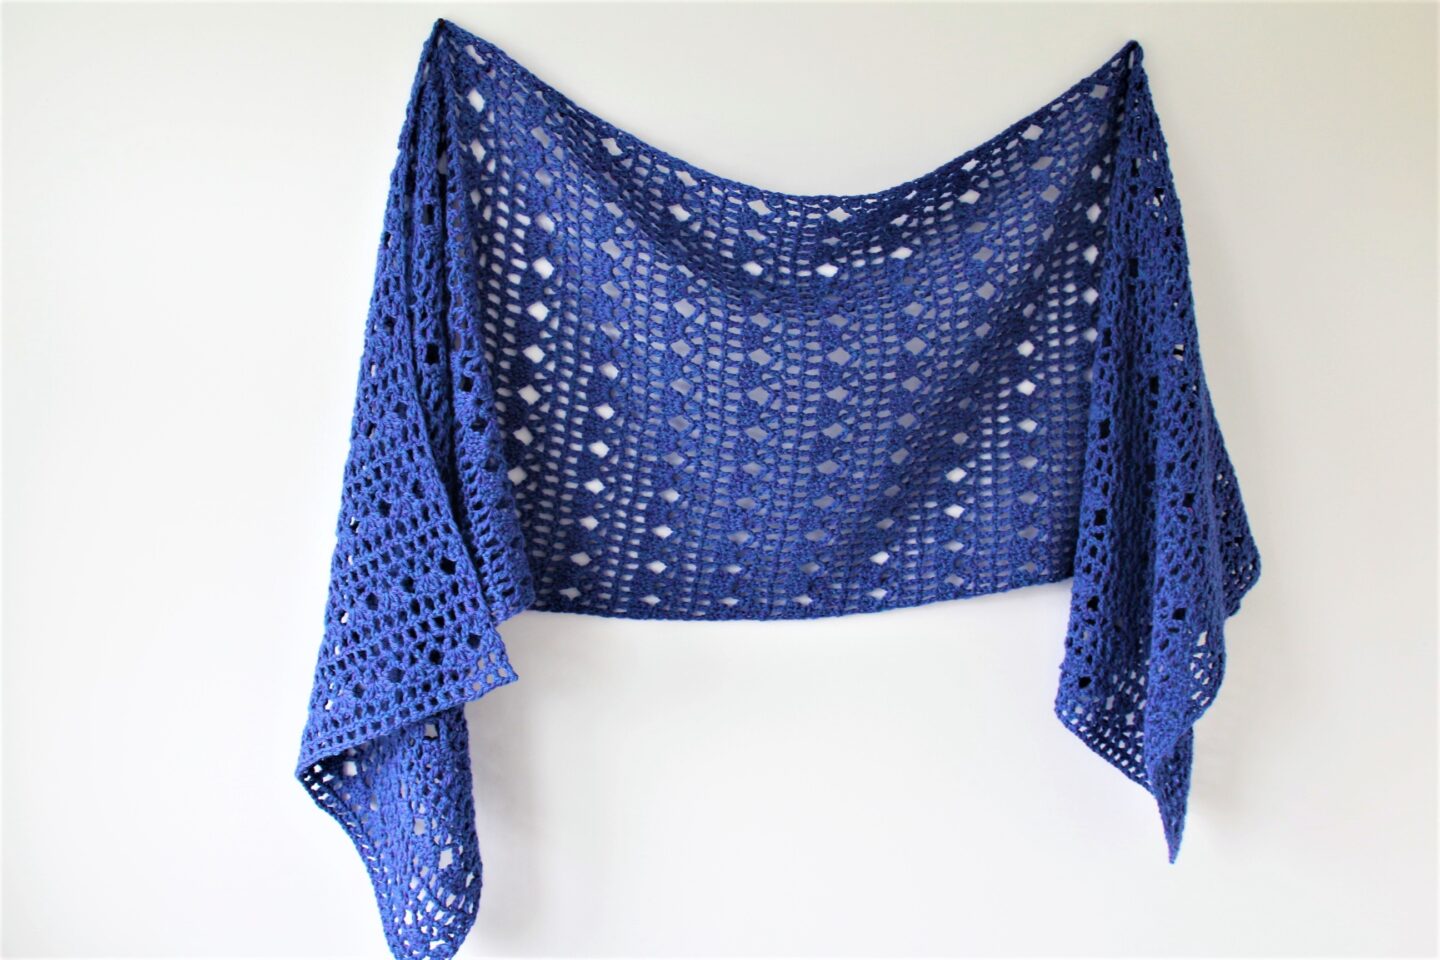 Easy crochet shawl pattern